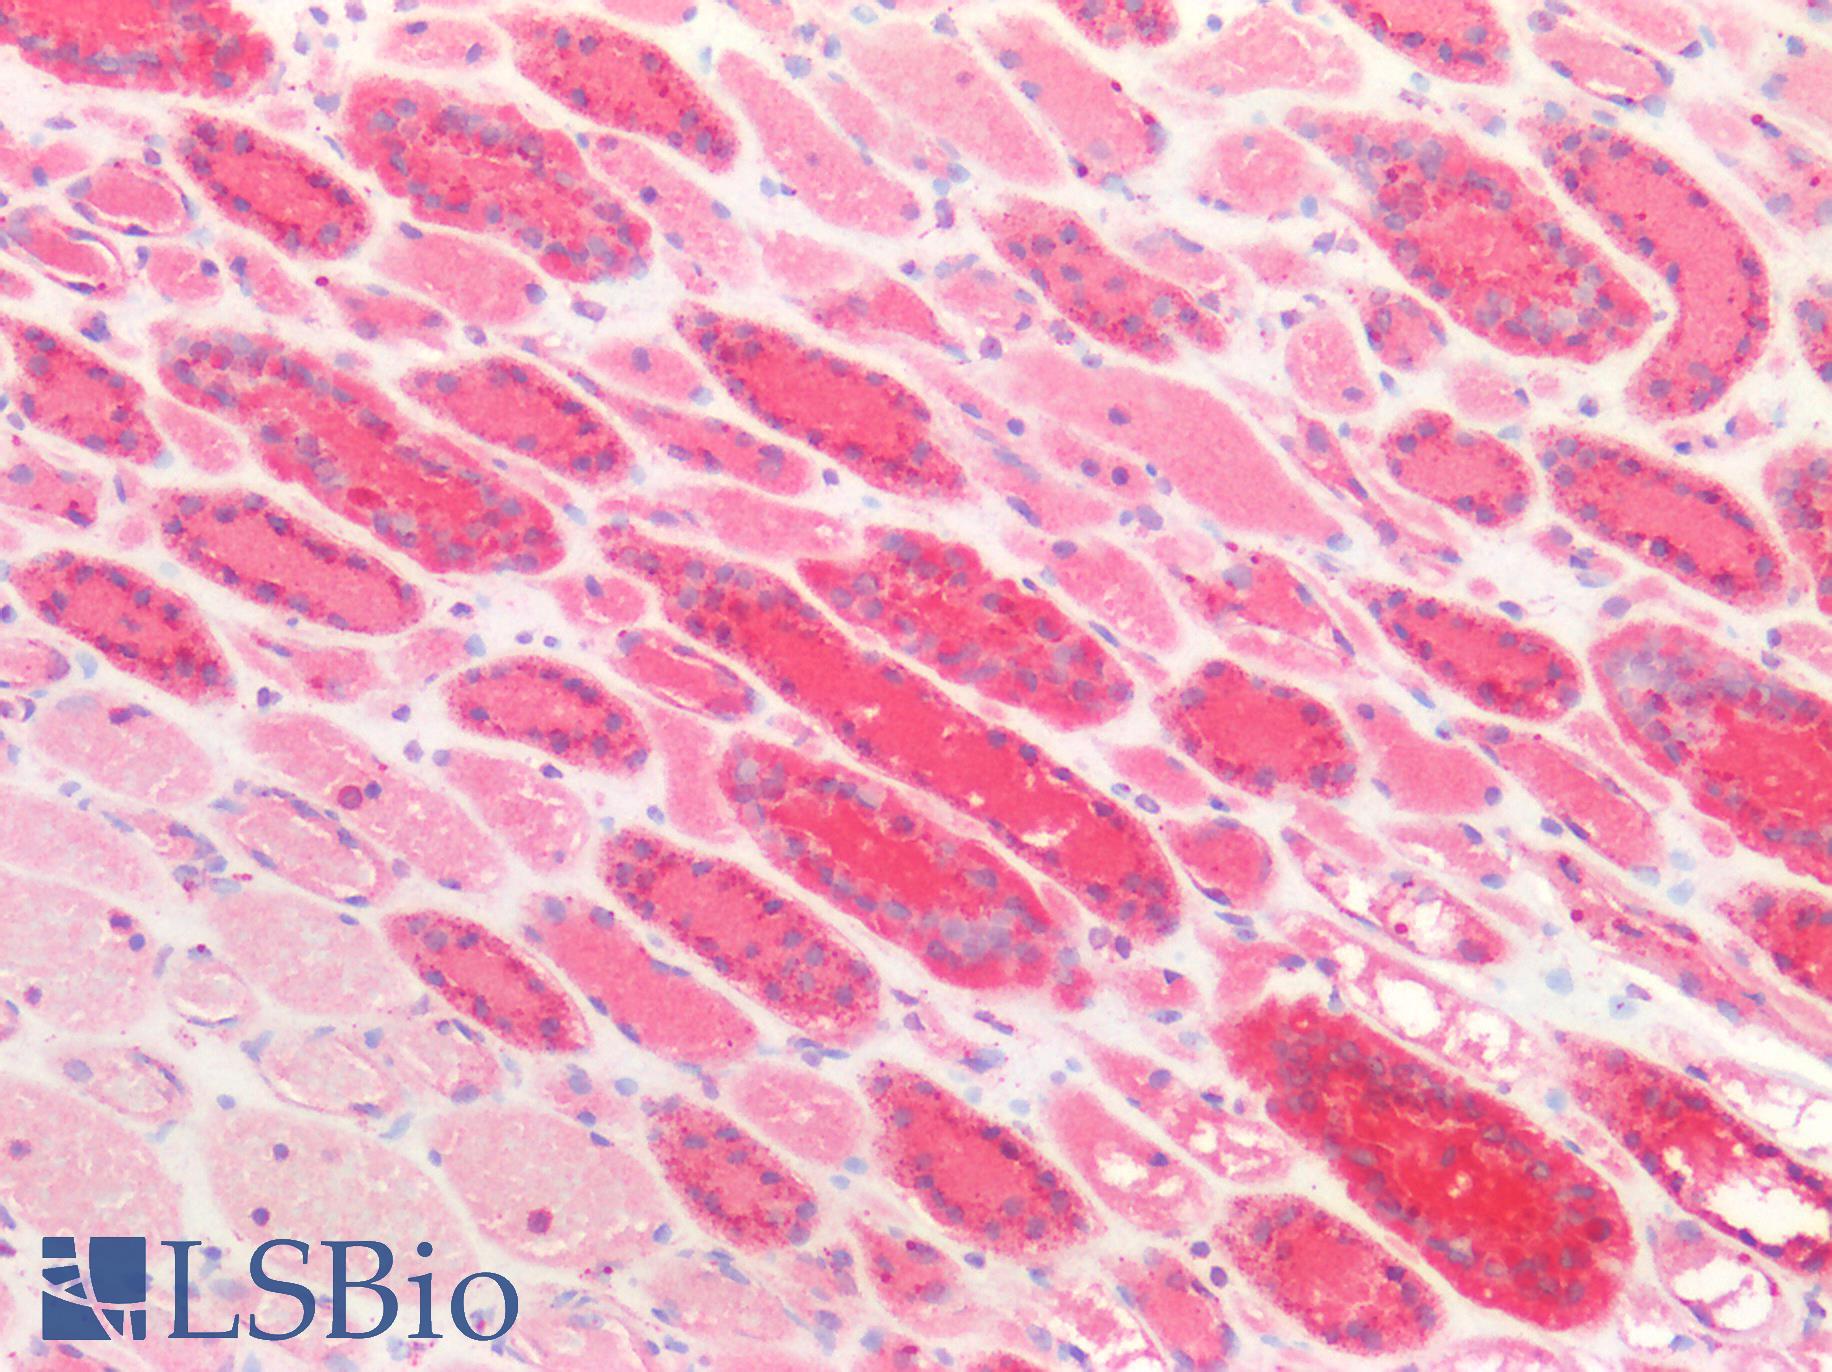 CTSD / Cathepsin D Antibody - Human Kidney: Formalin-Fixed, Paraffin-Embedded (FFPE)